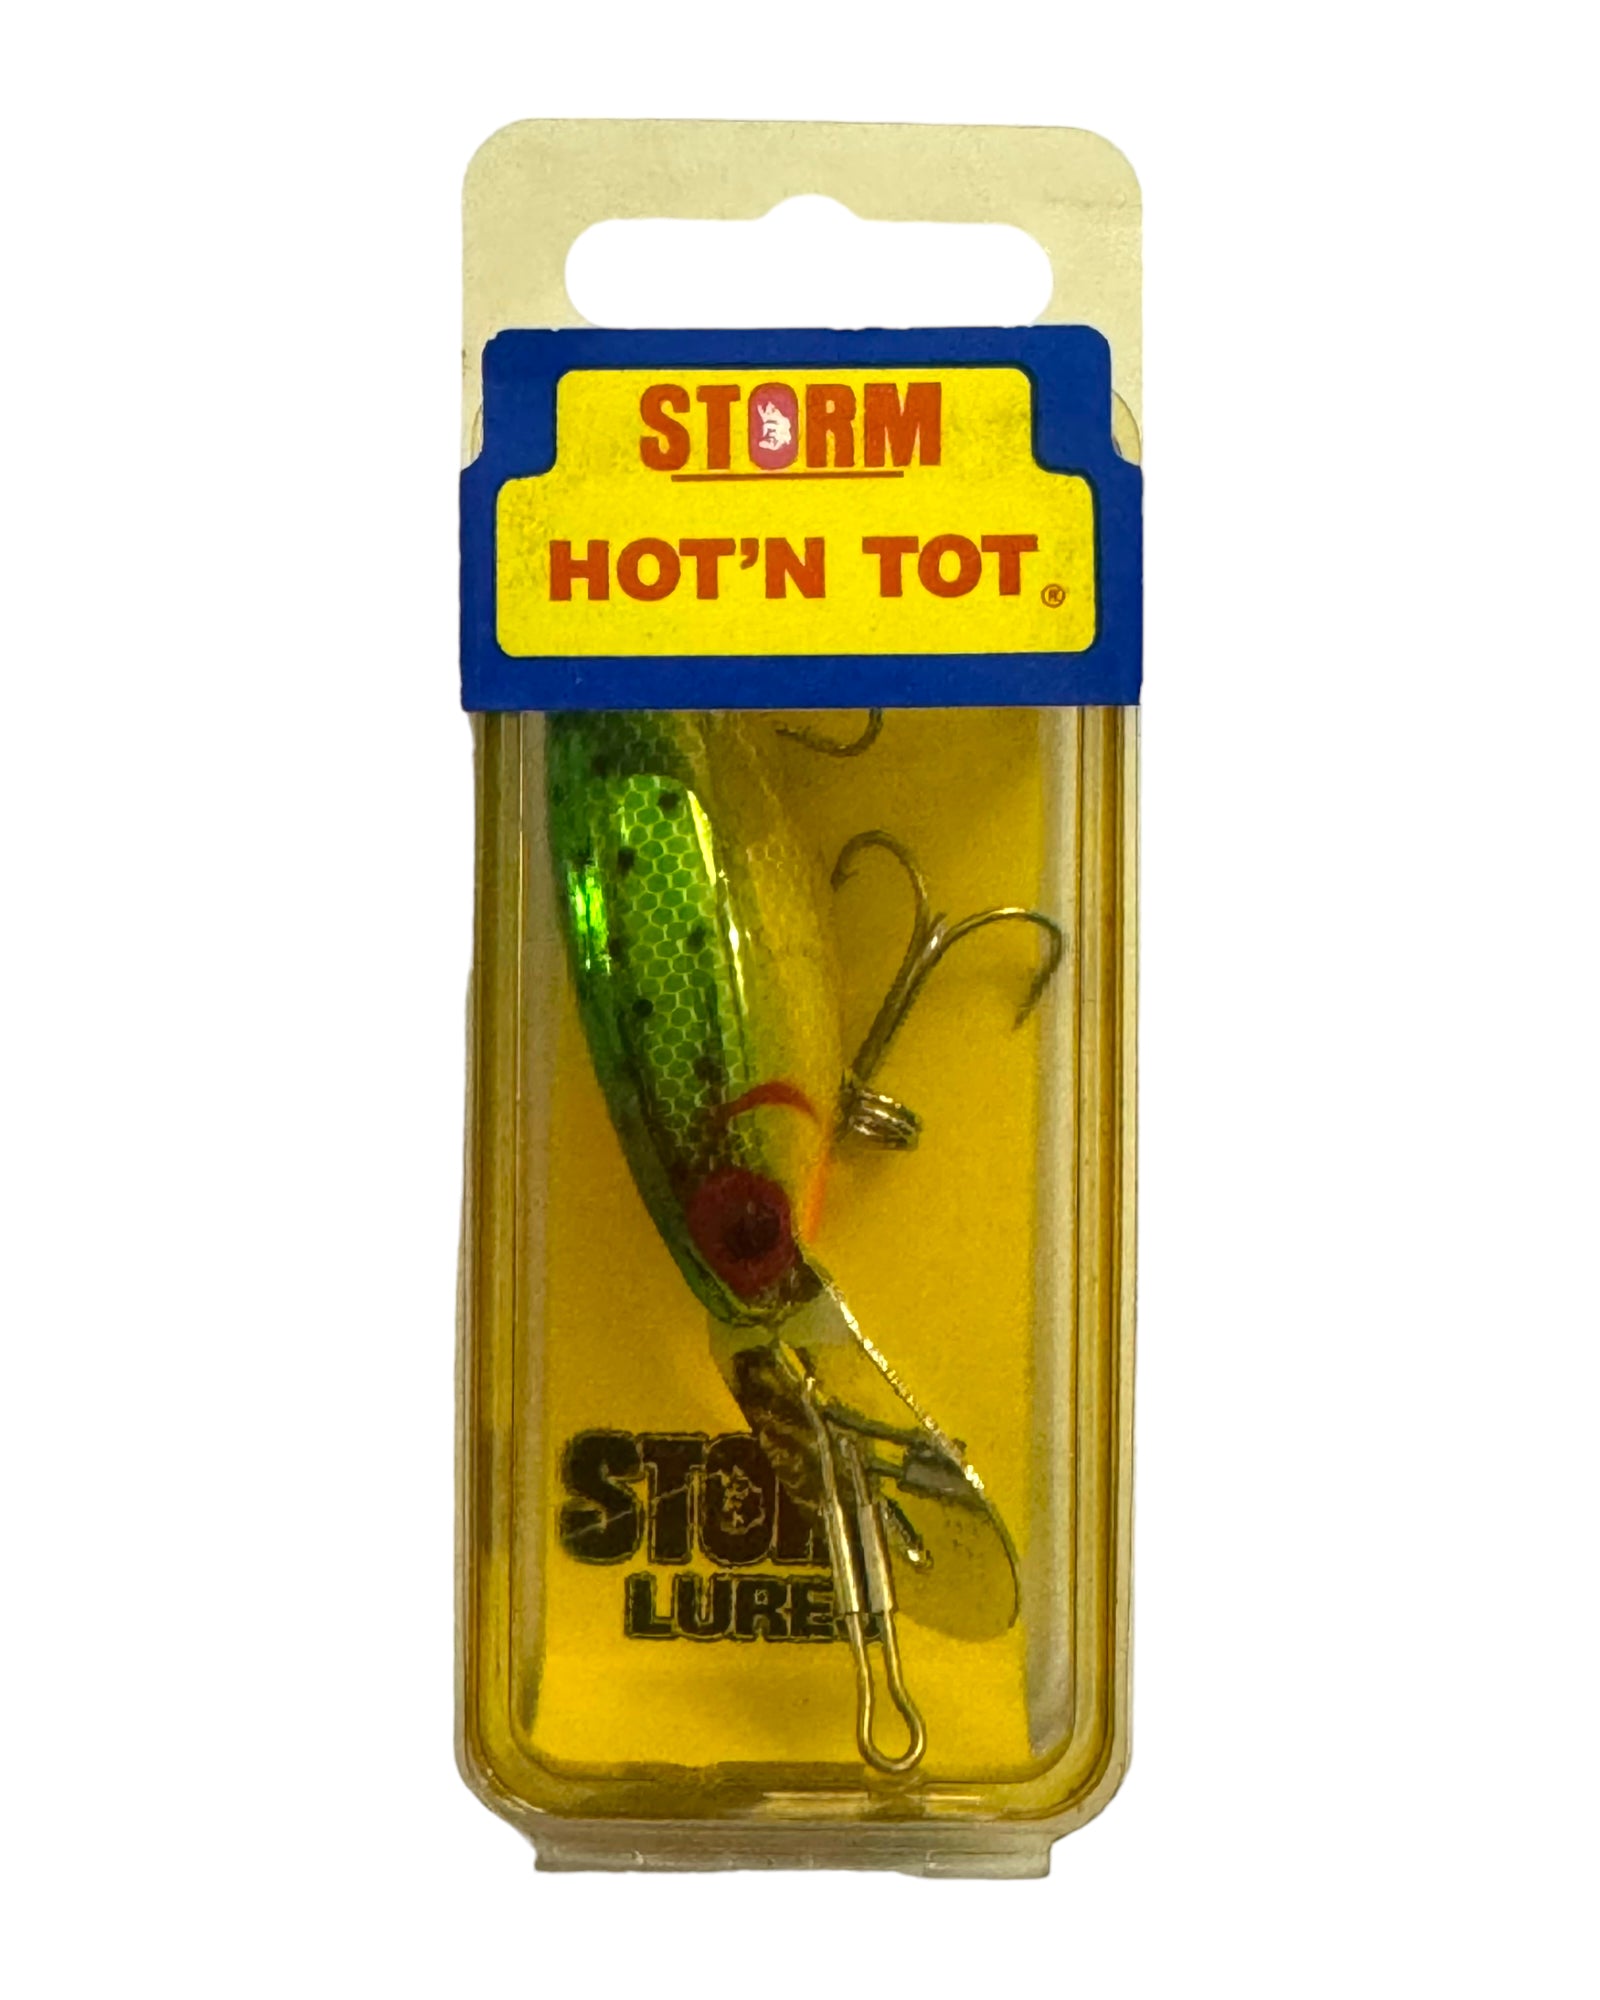 STORM LURES HOT N TOT Fishing Lure • H160 METALLIC GREEN YLW